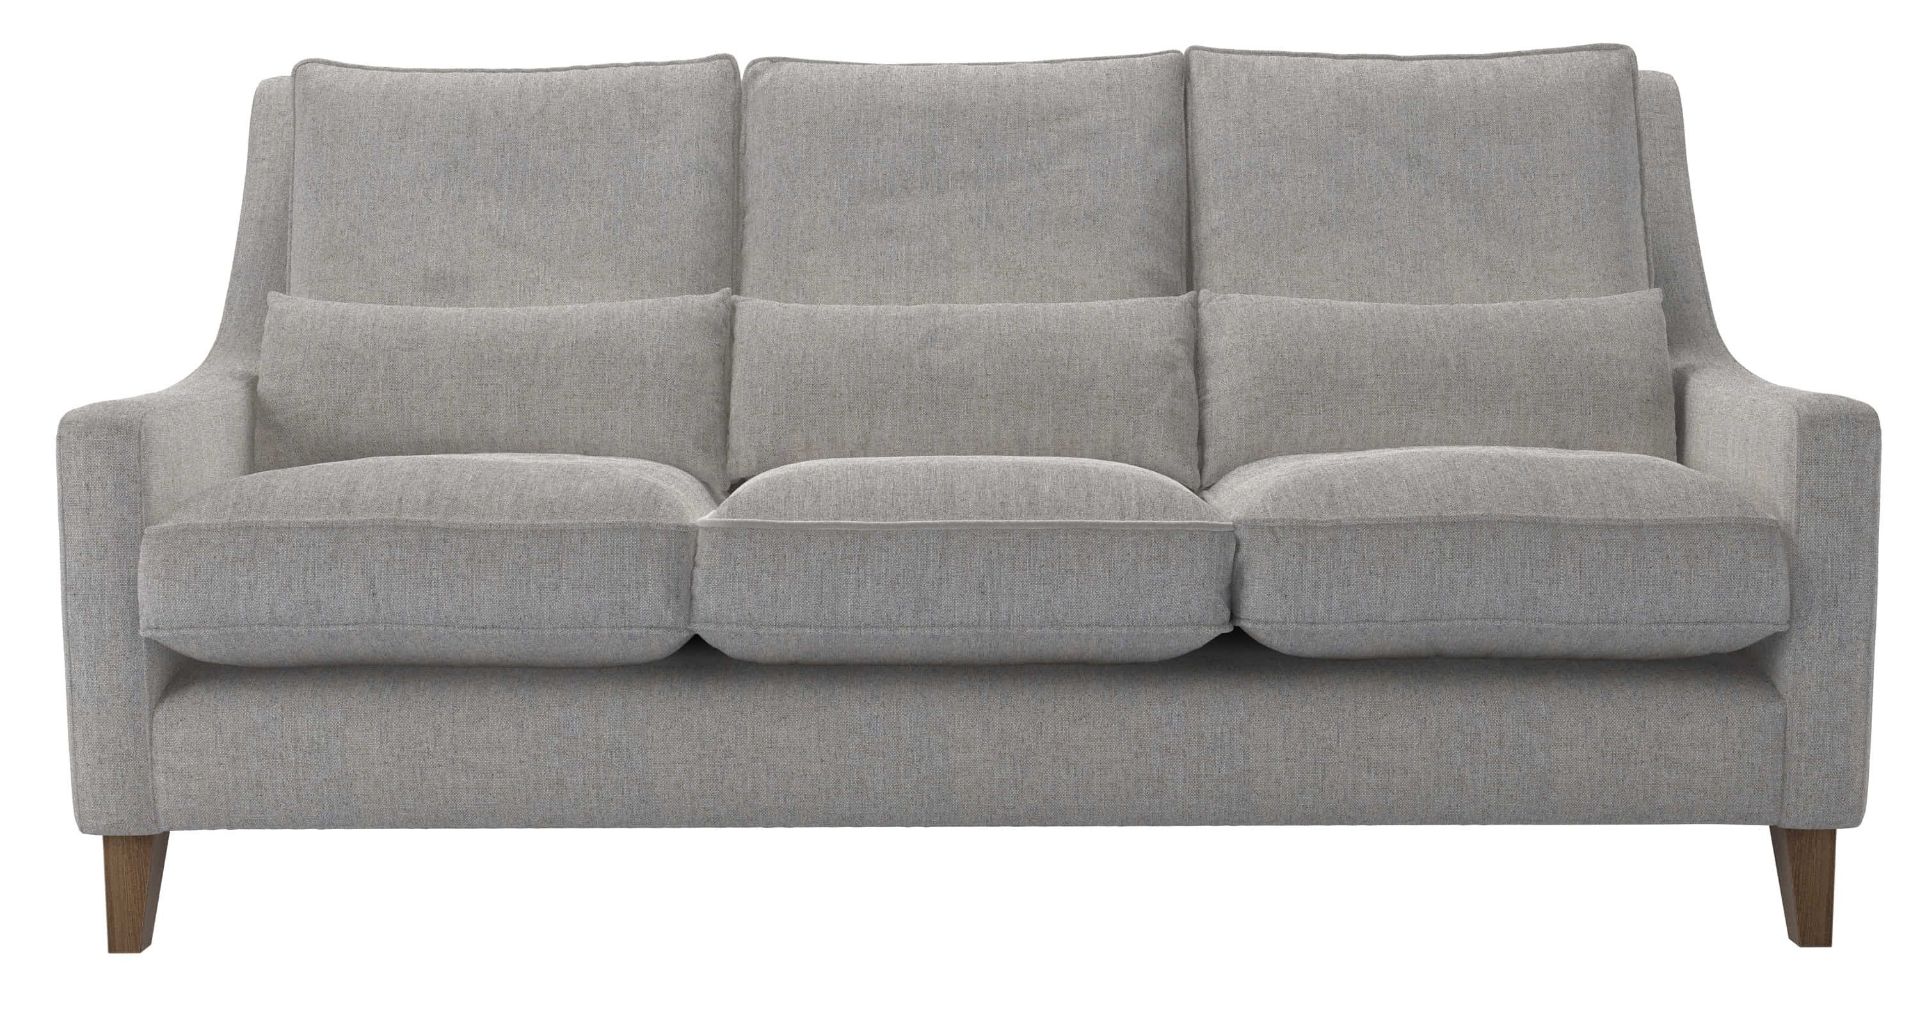 Iggy High Back 3 Seat Sofa In Rye Baylee Viscose Linen RRP - £2790